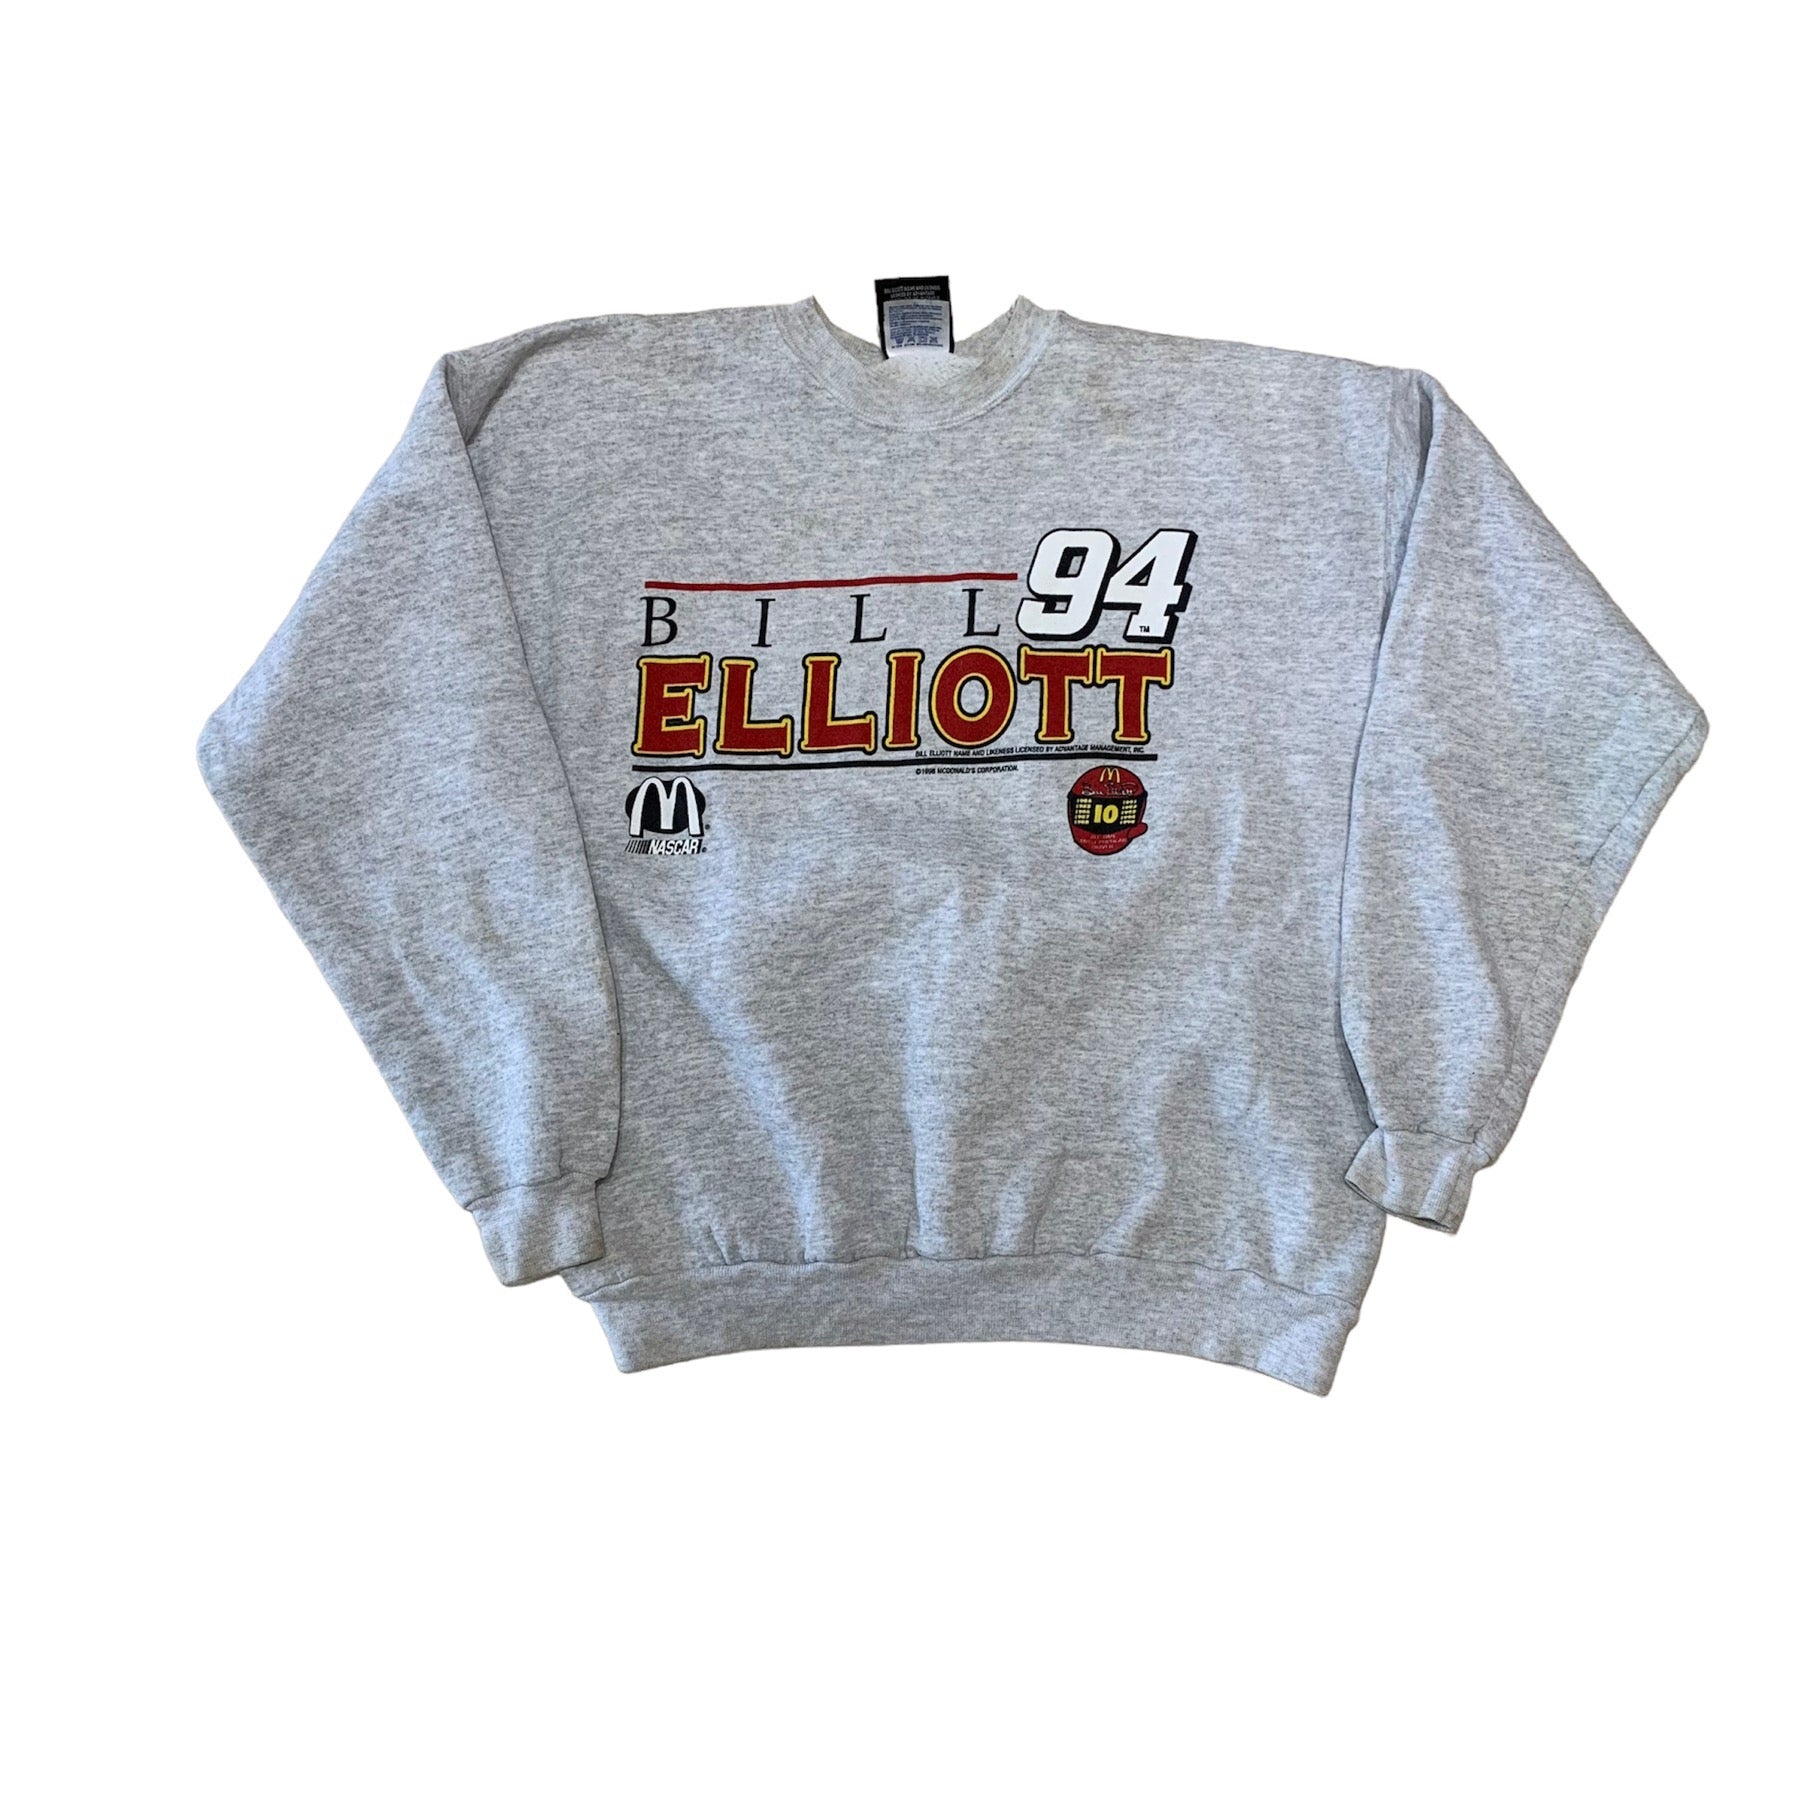 1996 BILL ELLIOT NASCAR CREWNECK